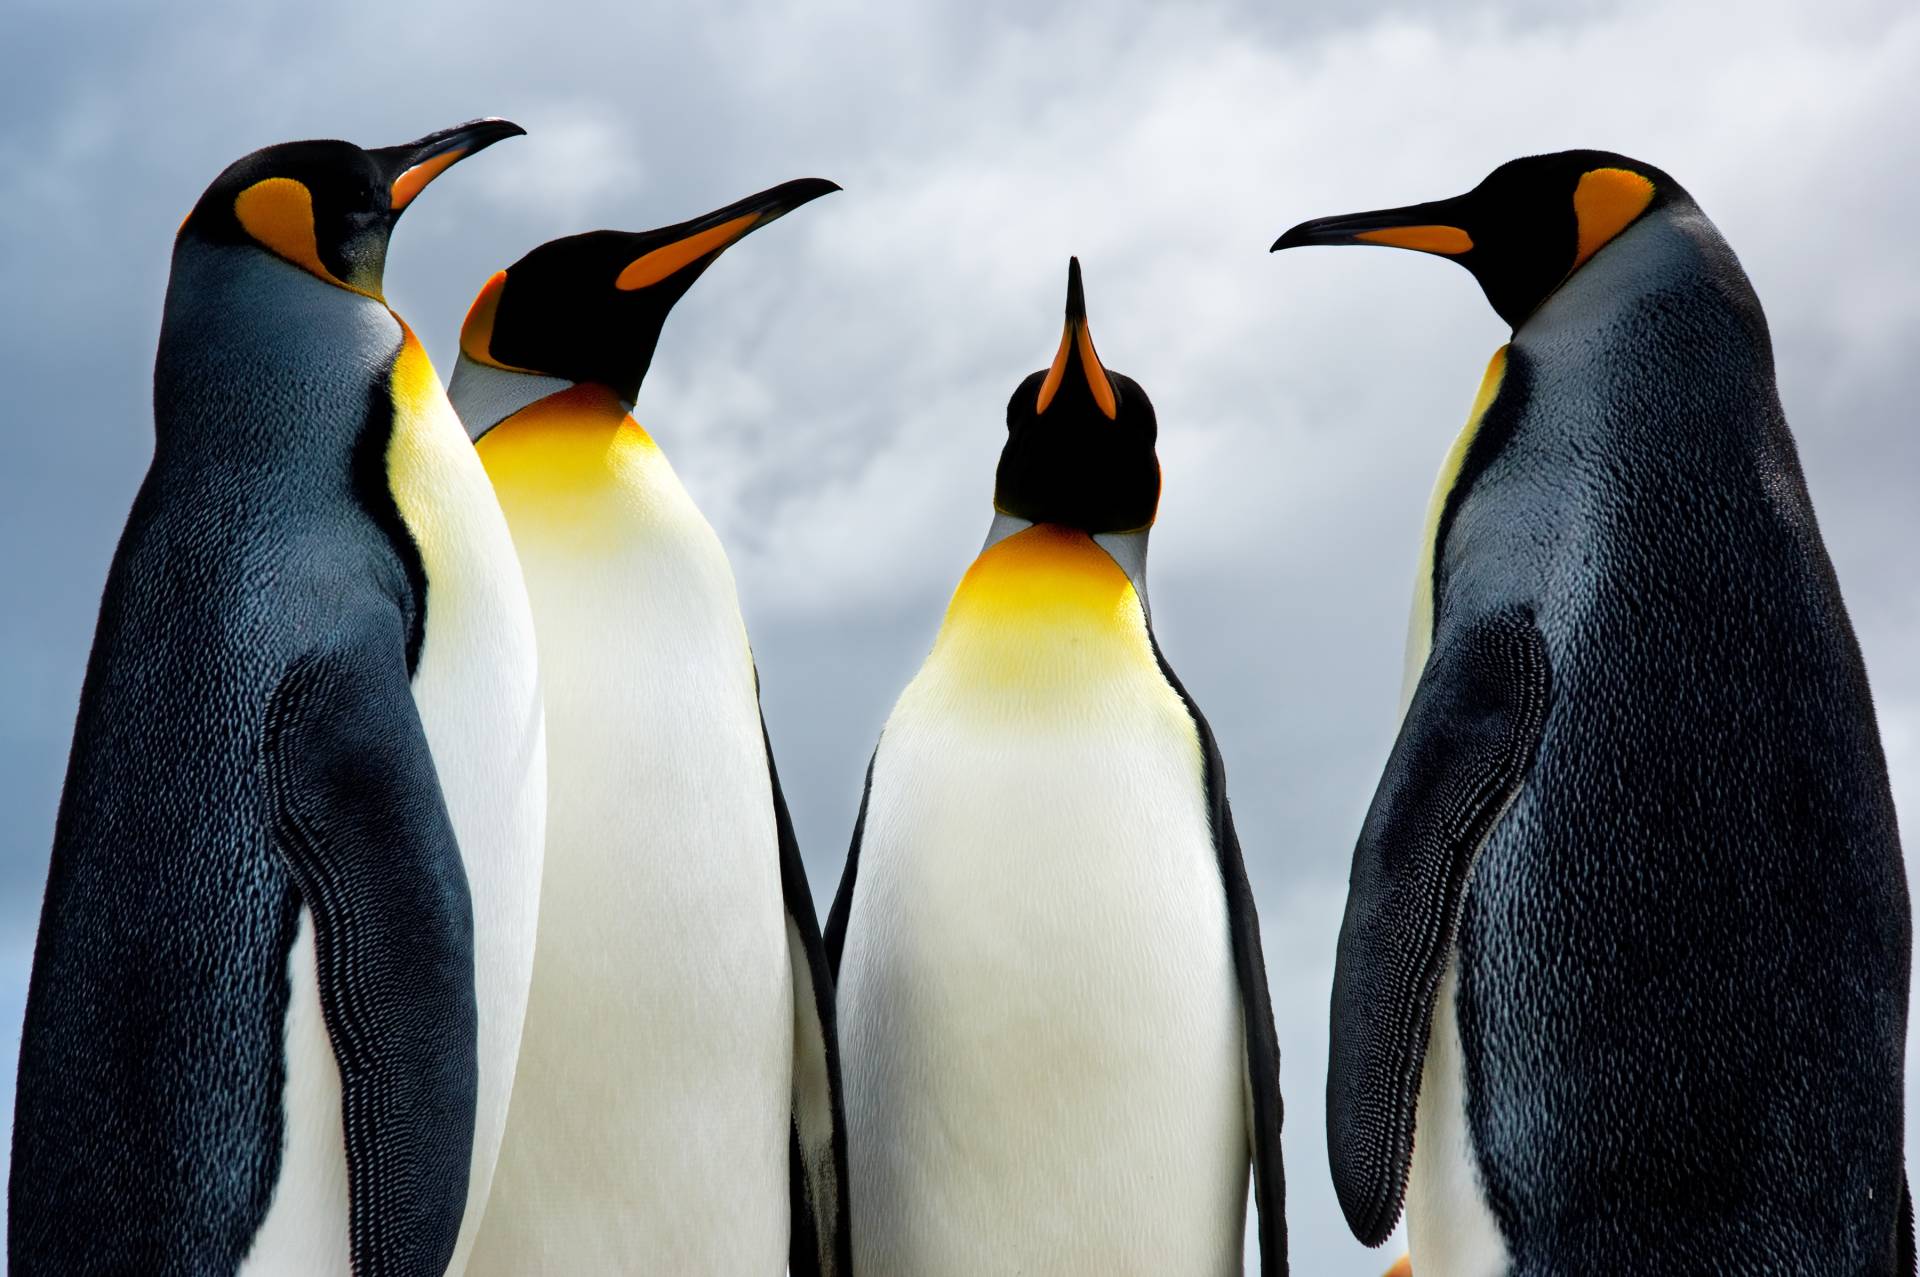 Papermoon Fototapete "King Pinguins" von Papermoon